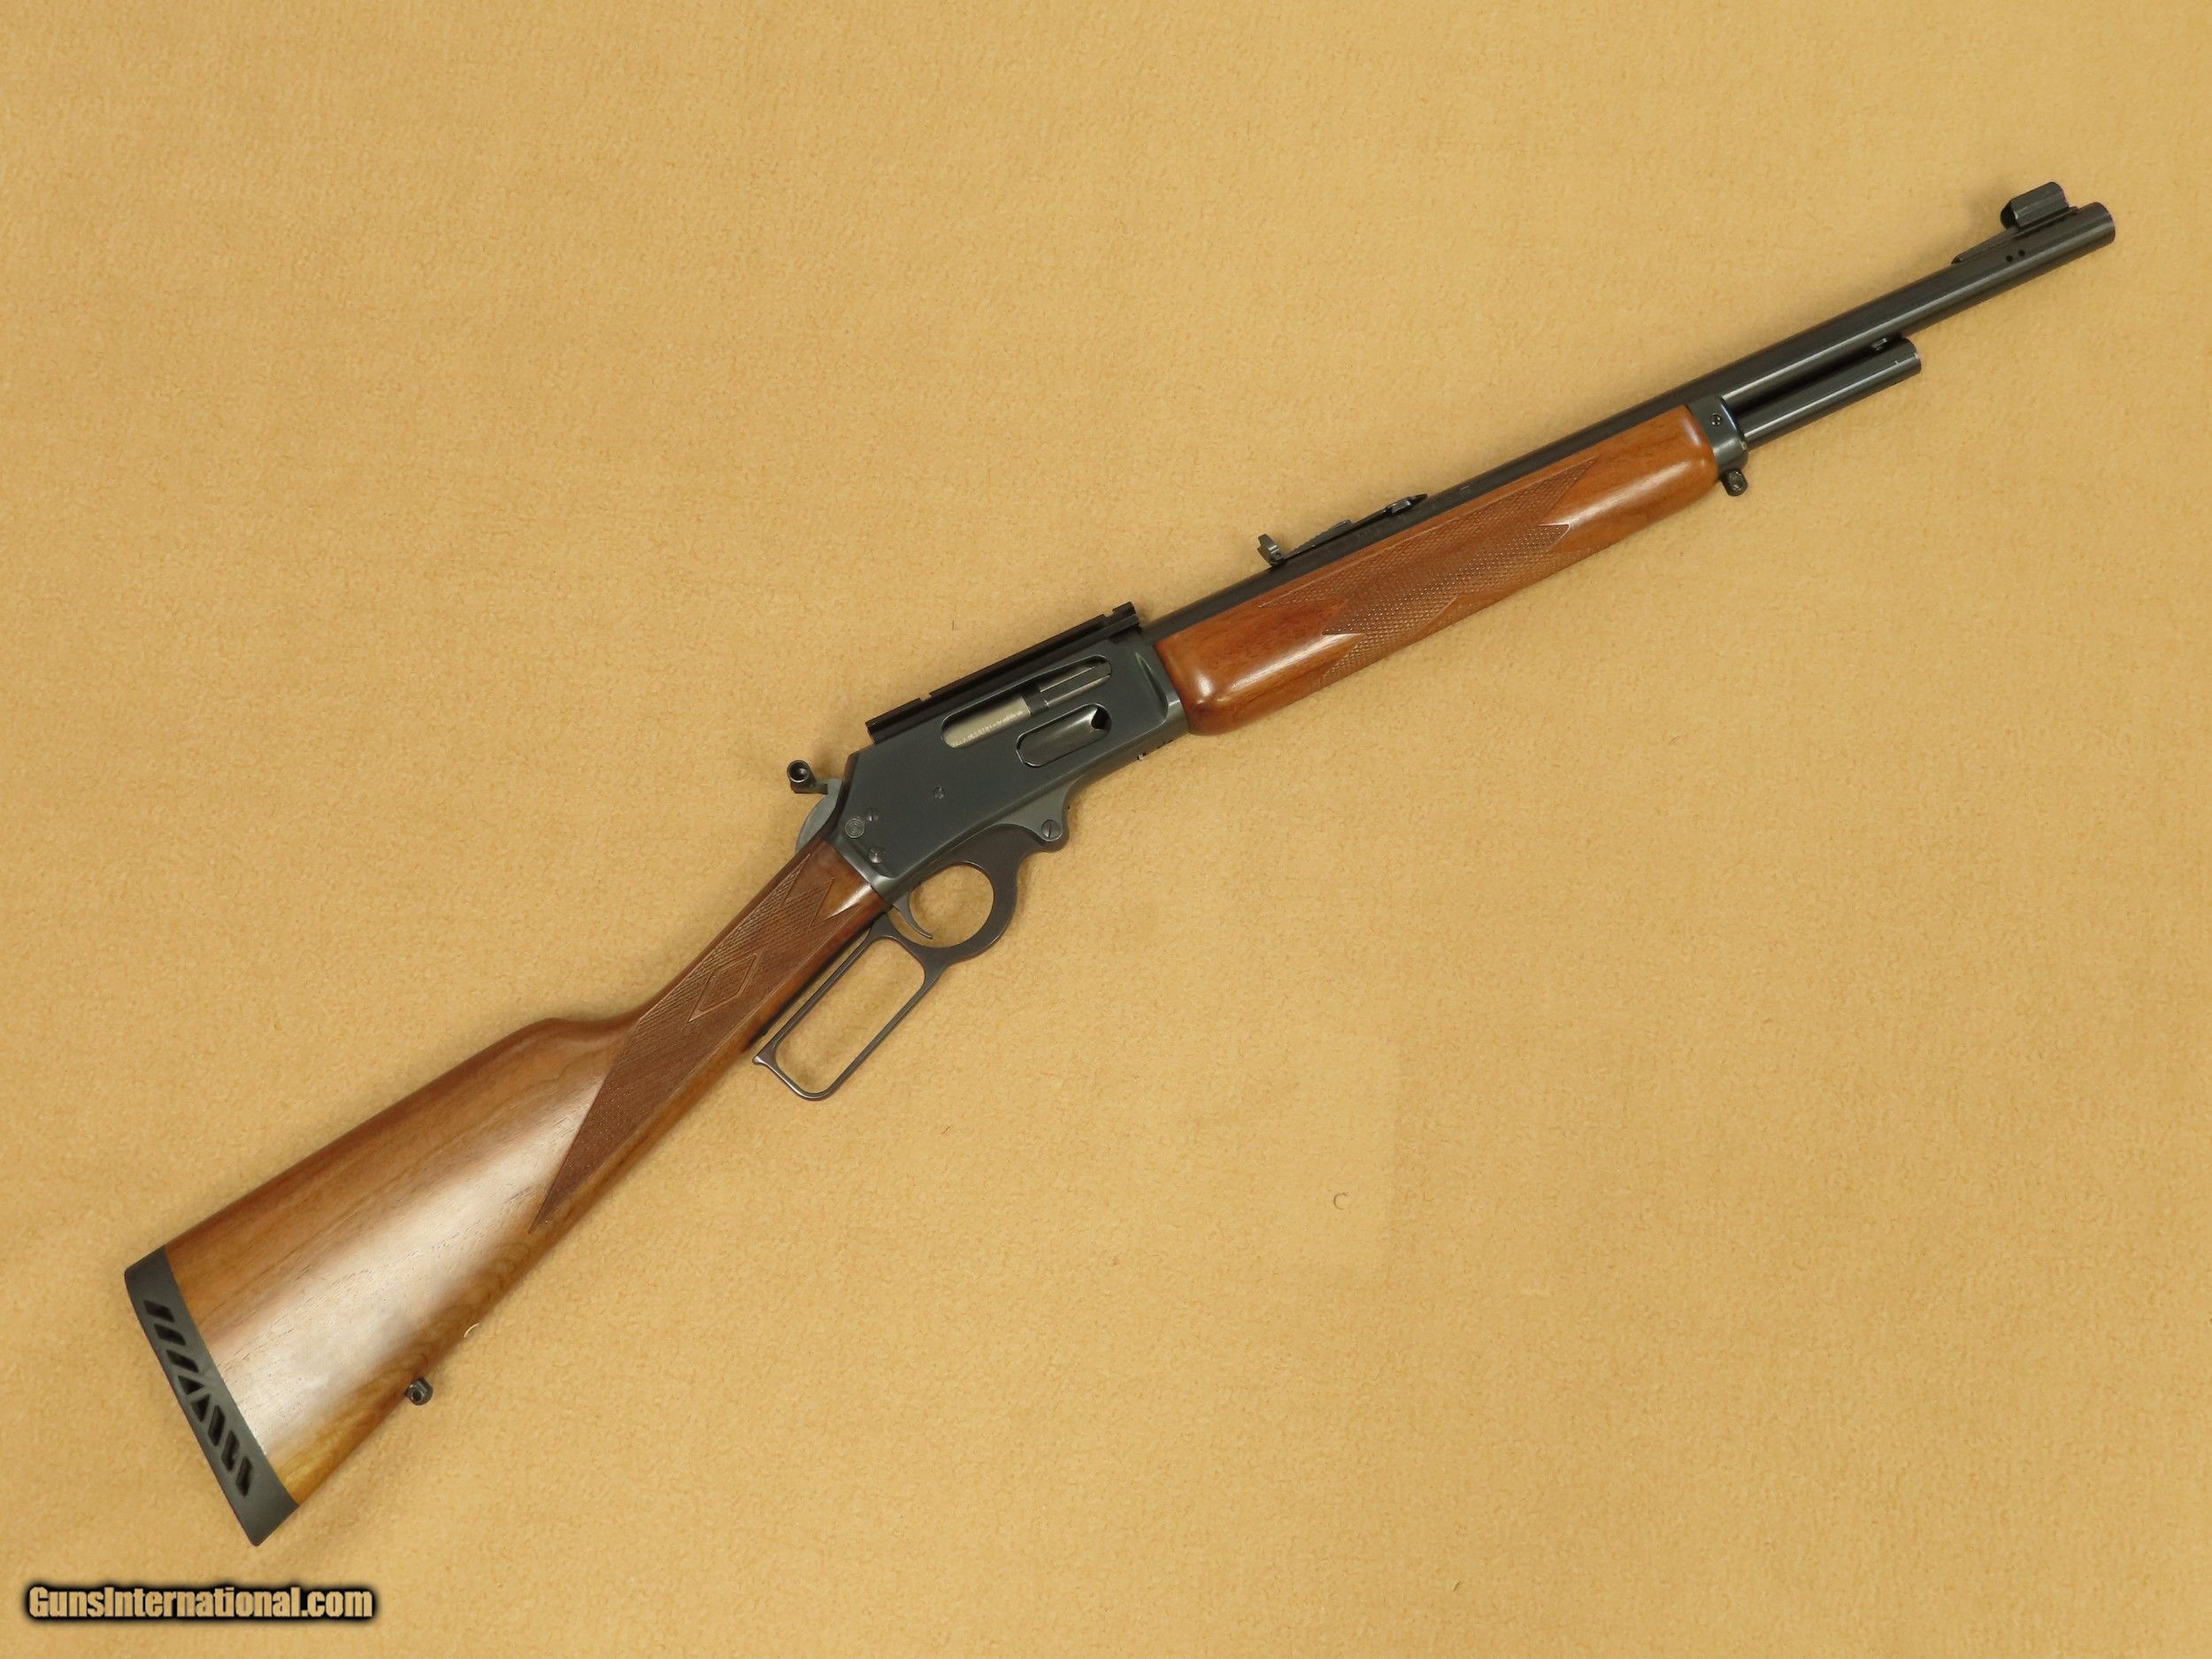 marlin model 1895 guide gun